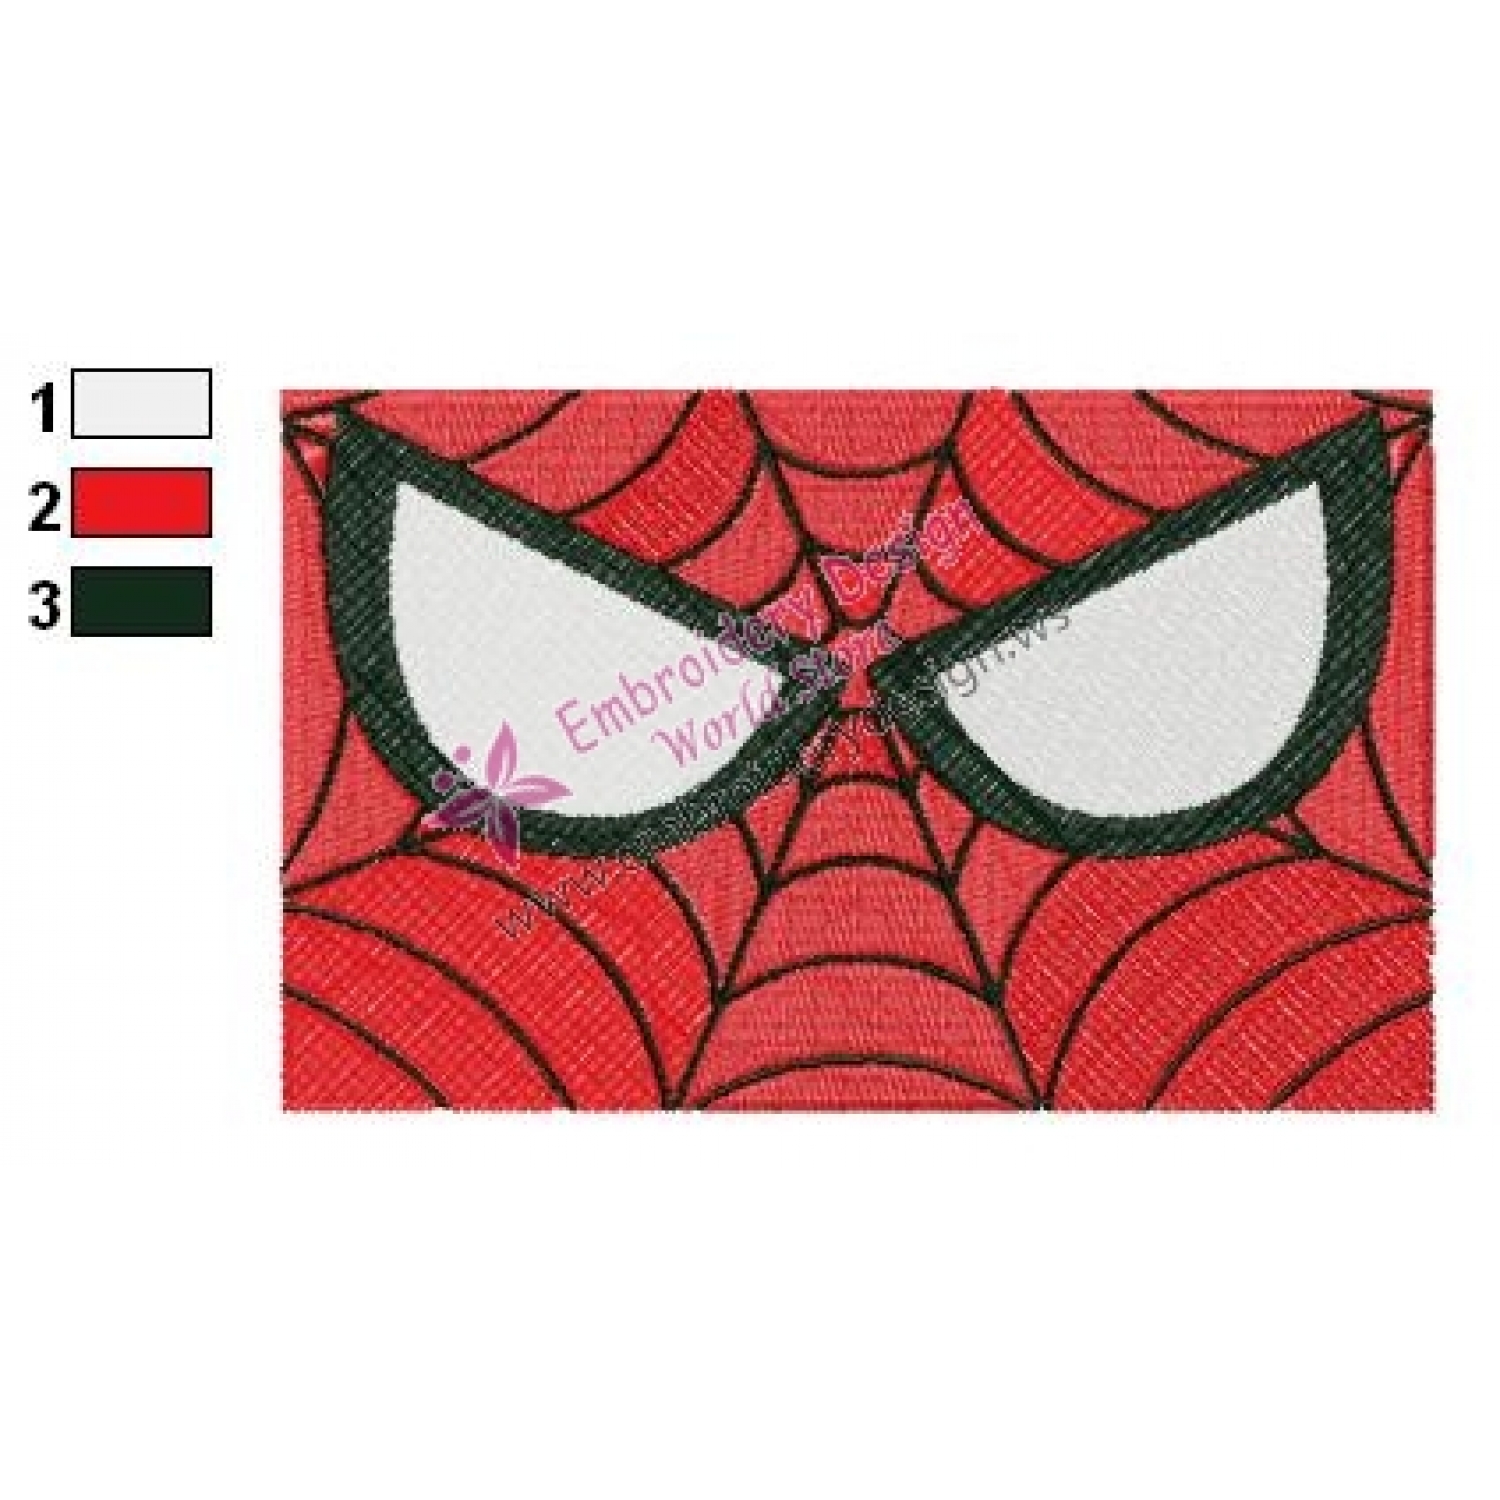 Spiderman Embroidery Design 25